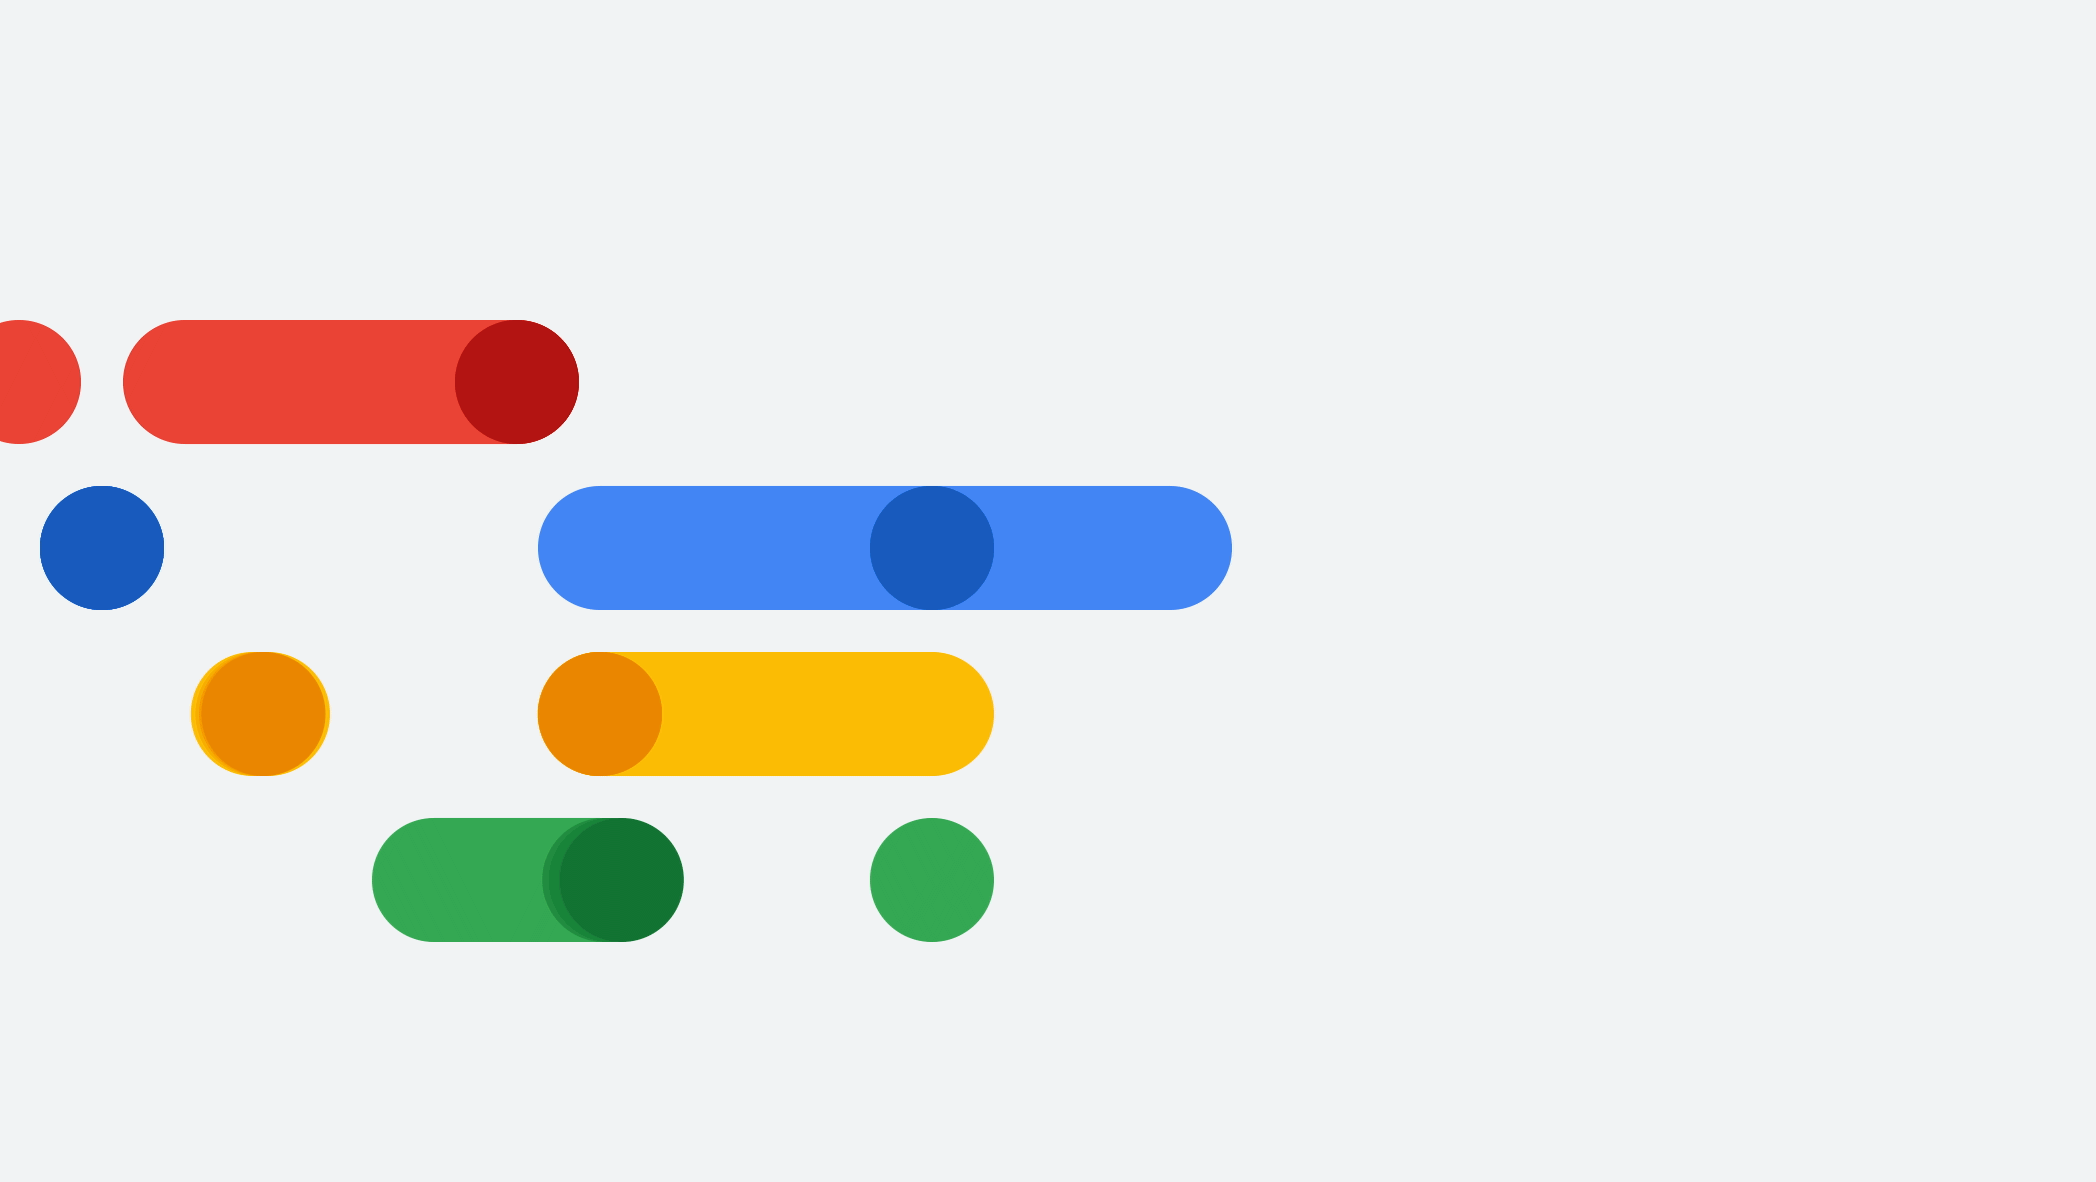 Colors of Google in an illustration design